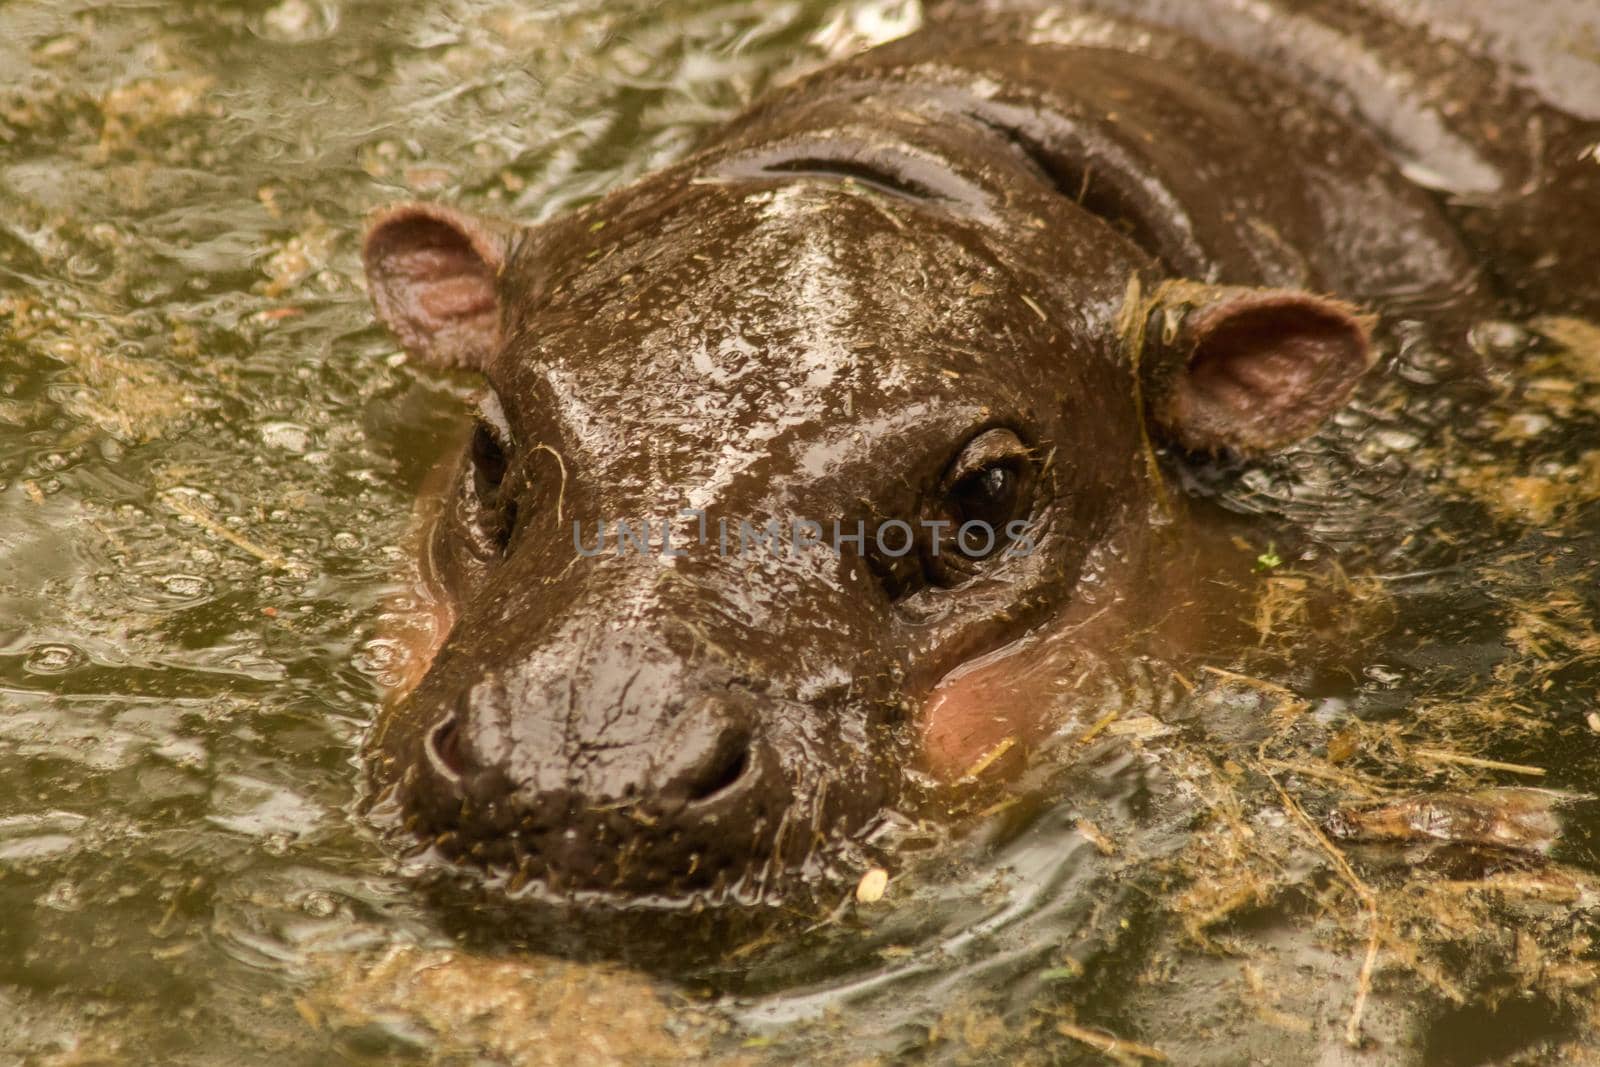 Hippopotamus in the water
Hippopotamus is a mammal.